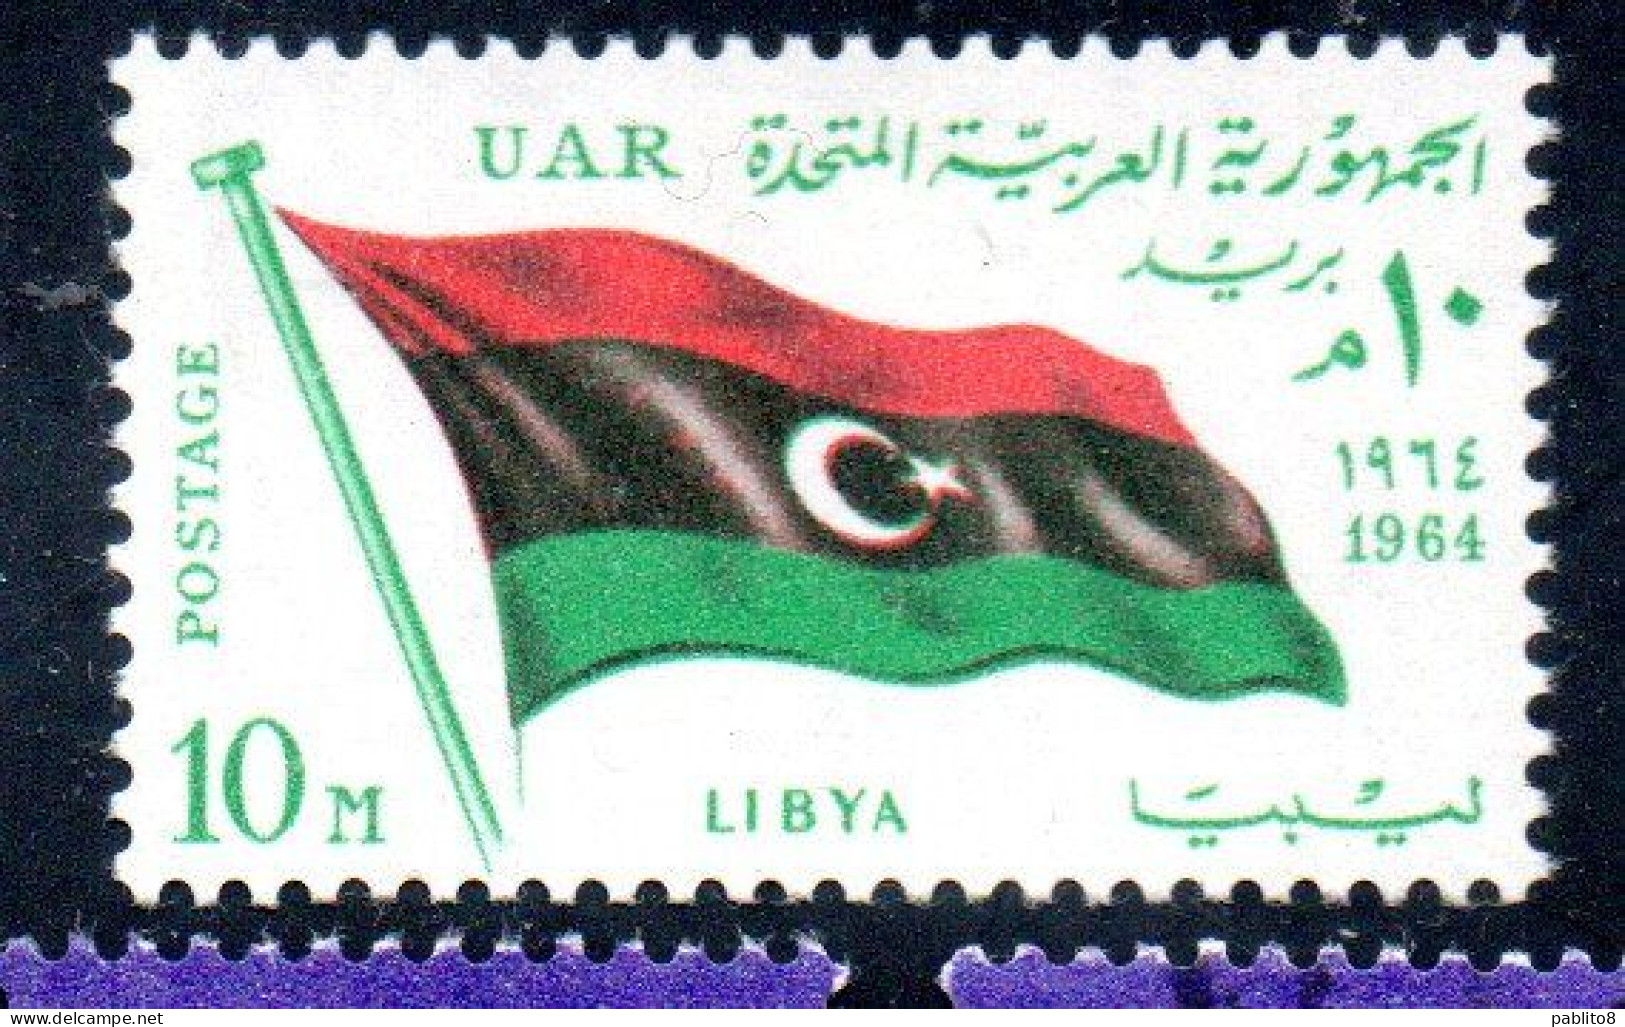 UAR EGYPT EGITTO 1964 SECOND MEETING OF HEADS STATE ARAB LEAGUE FLAG OF LIBYA 10m  MH - Neufs